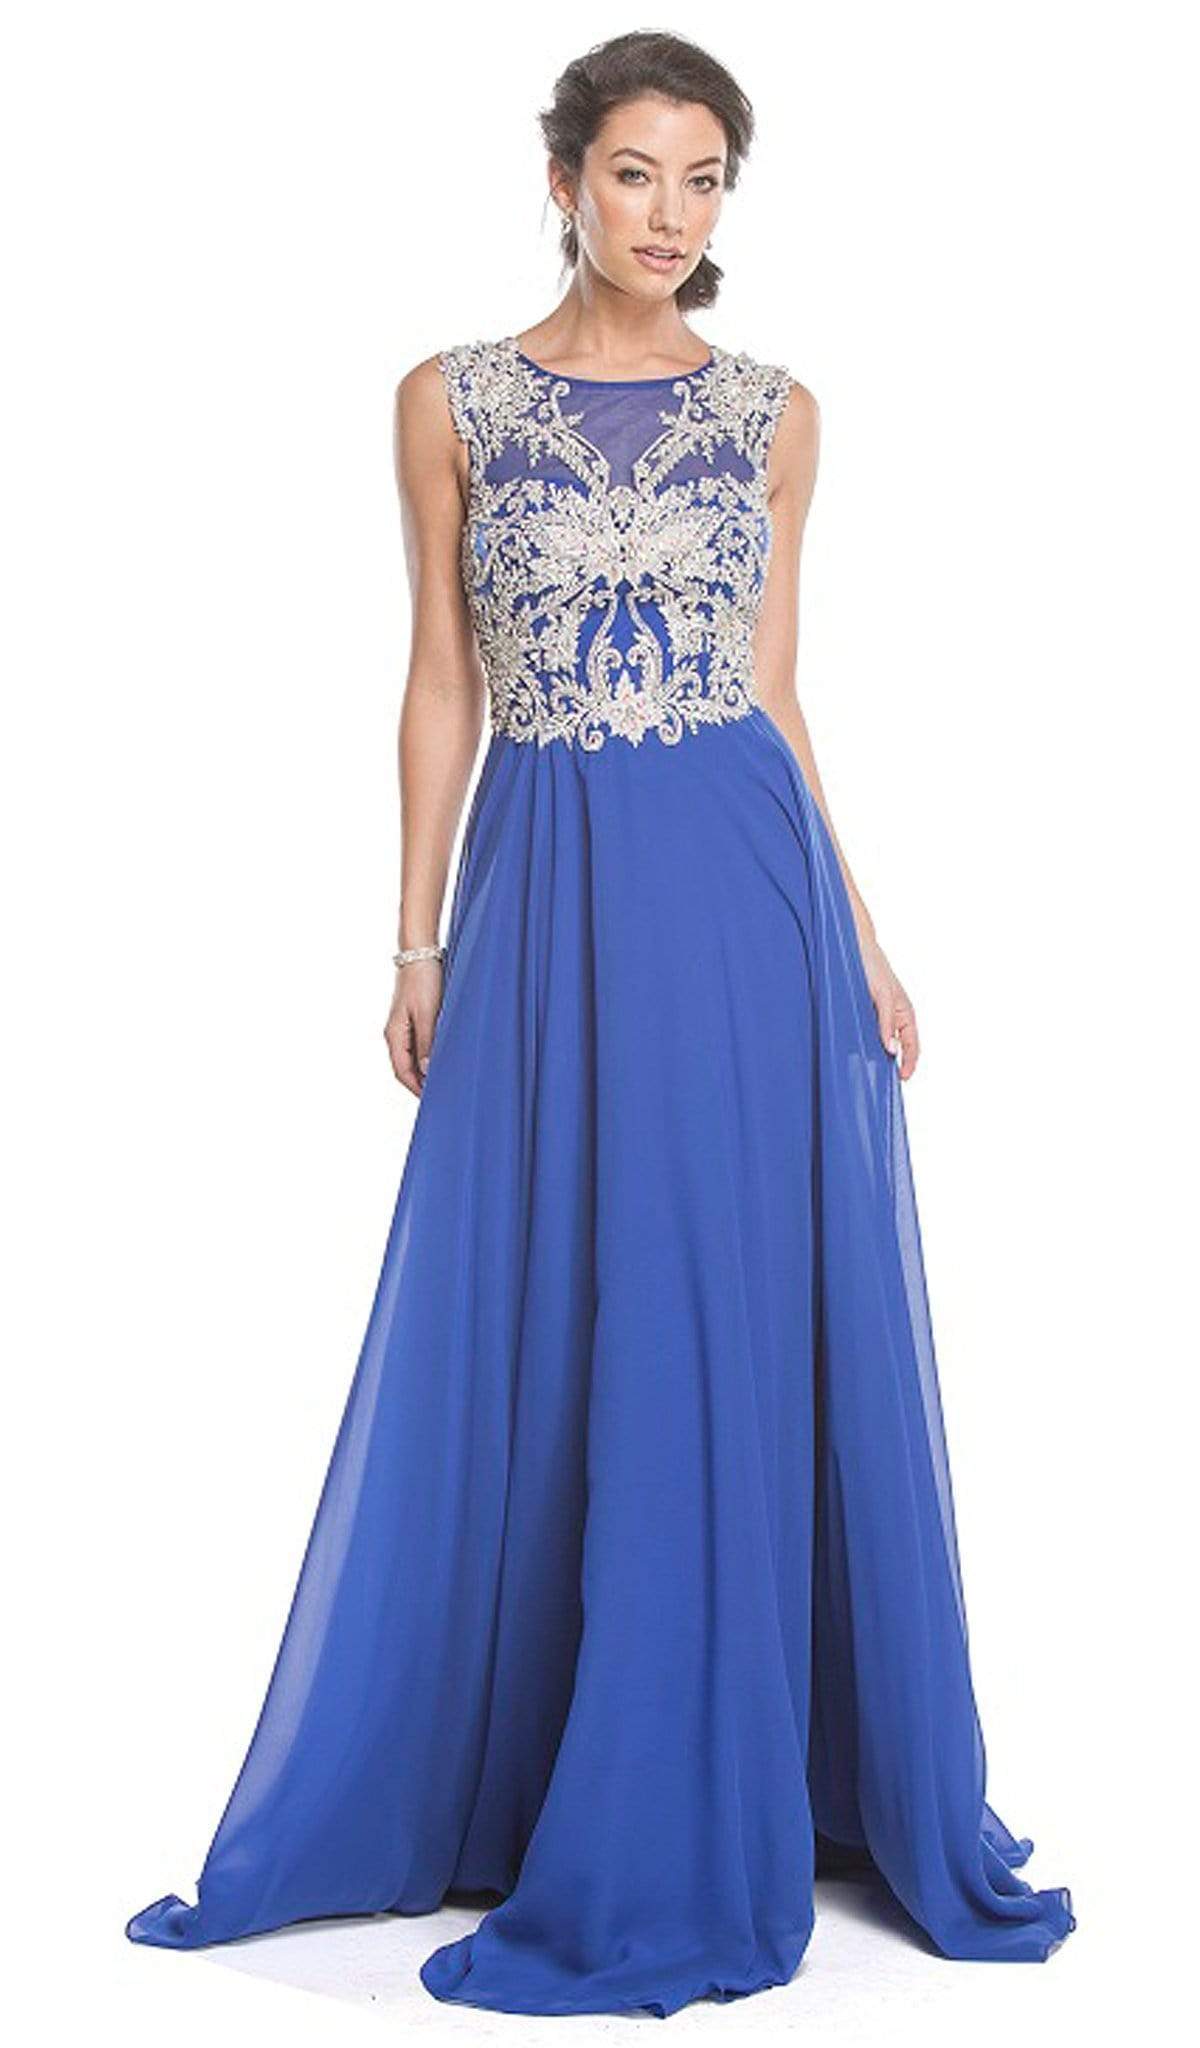 Aspeed Design - Embellished Sheer Bateau A-line Prom Dress
